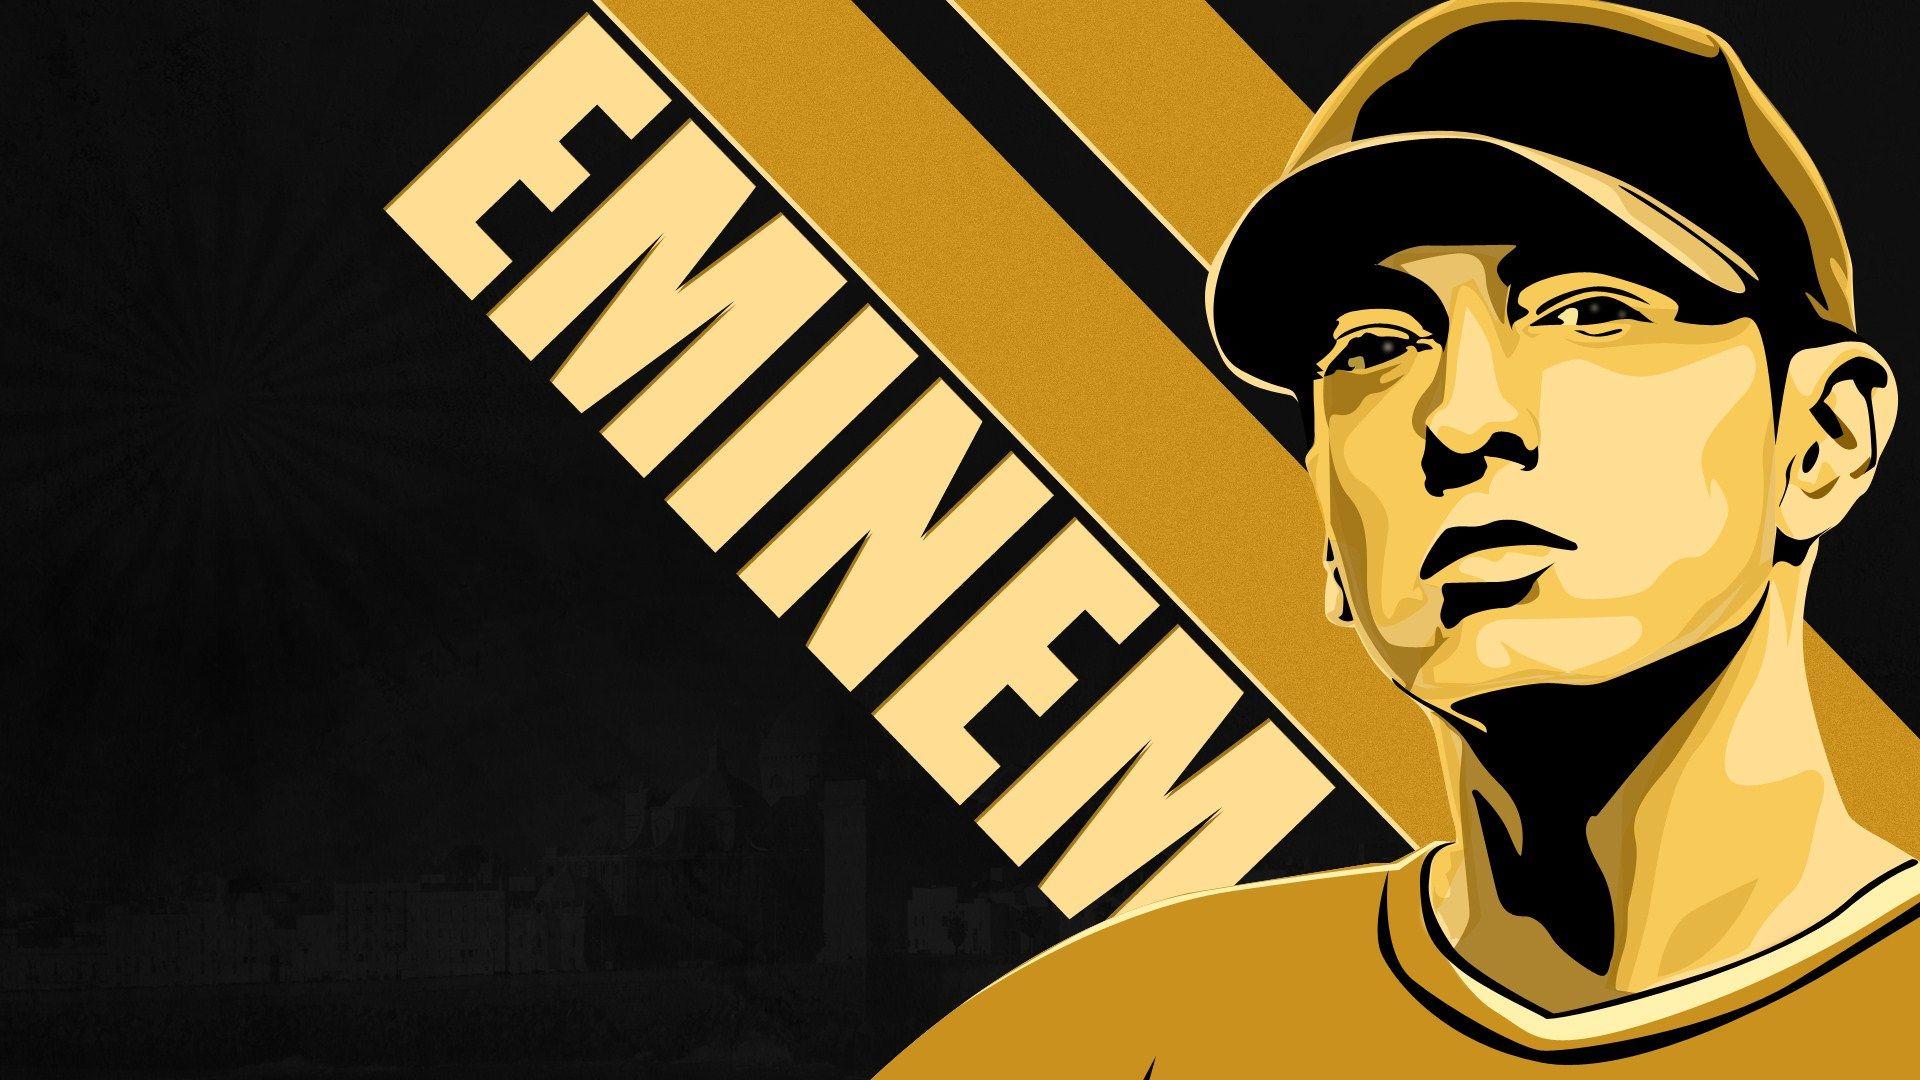 Eminem Wallpaper HD. wallpaper.wiki